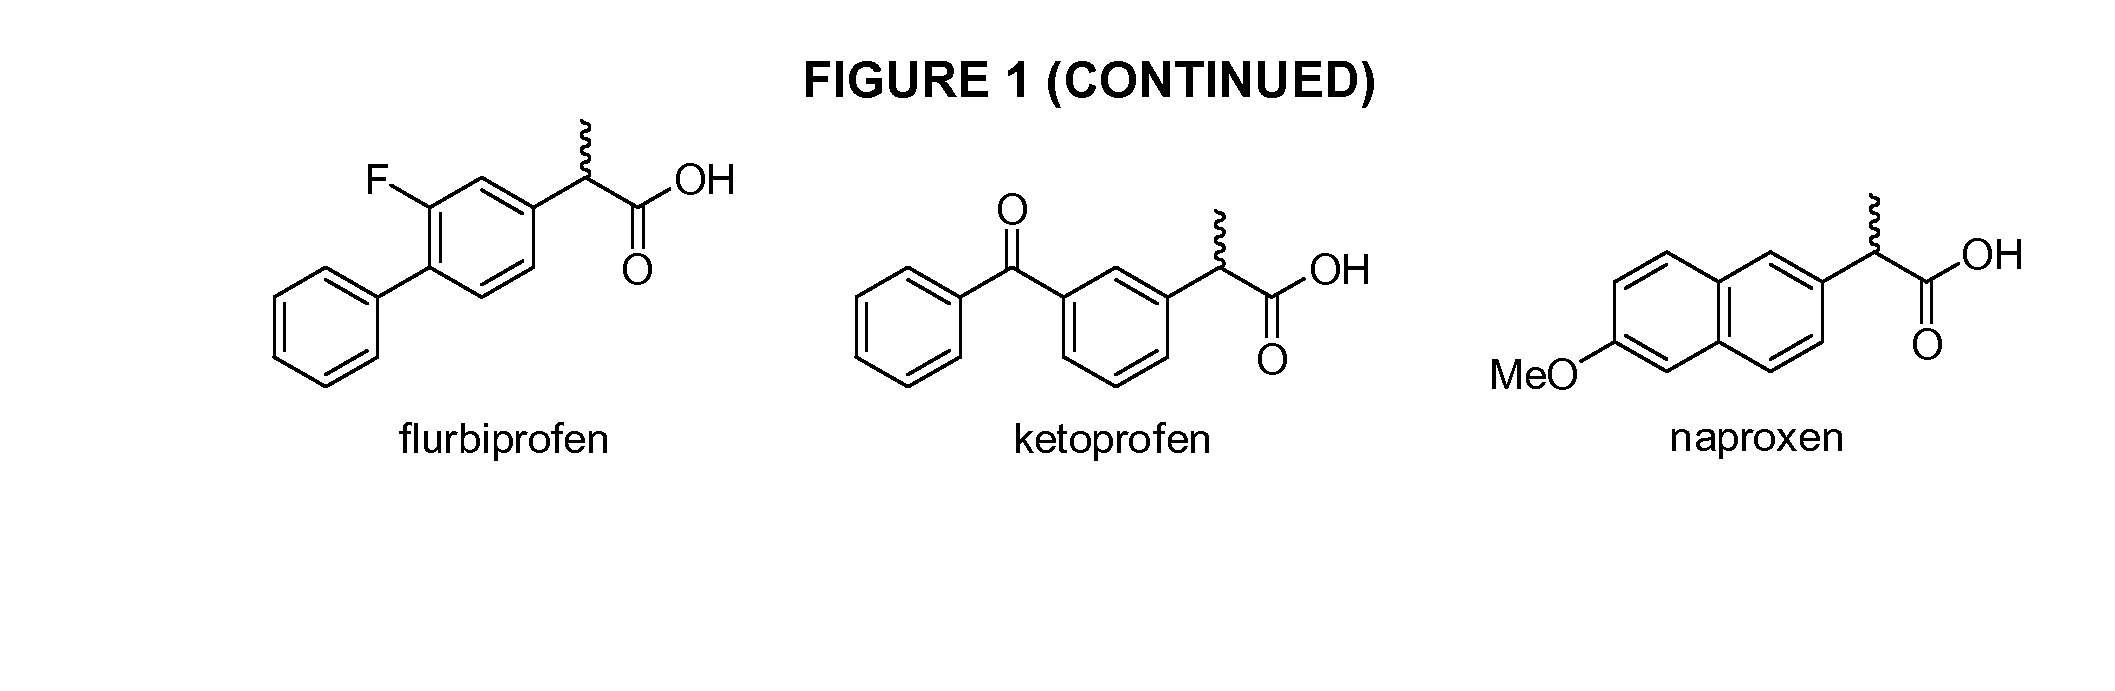 Phenylethanoic acid, phenylpropanoic acid and phenylpropenoic acid conjugates and prodrugs of hydrocodone, method of making and use thereof